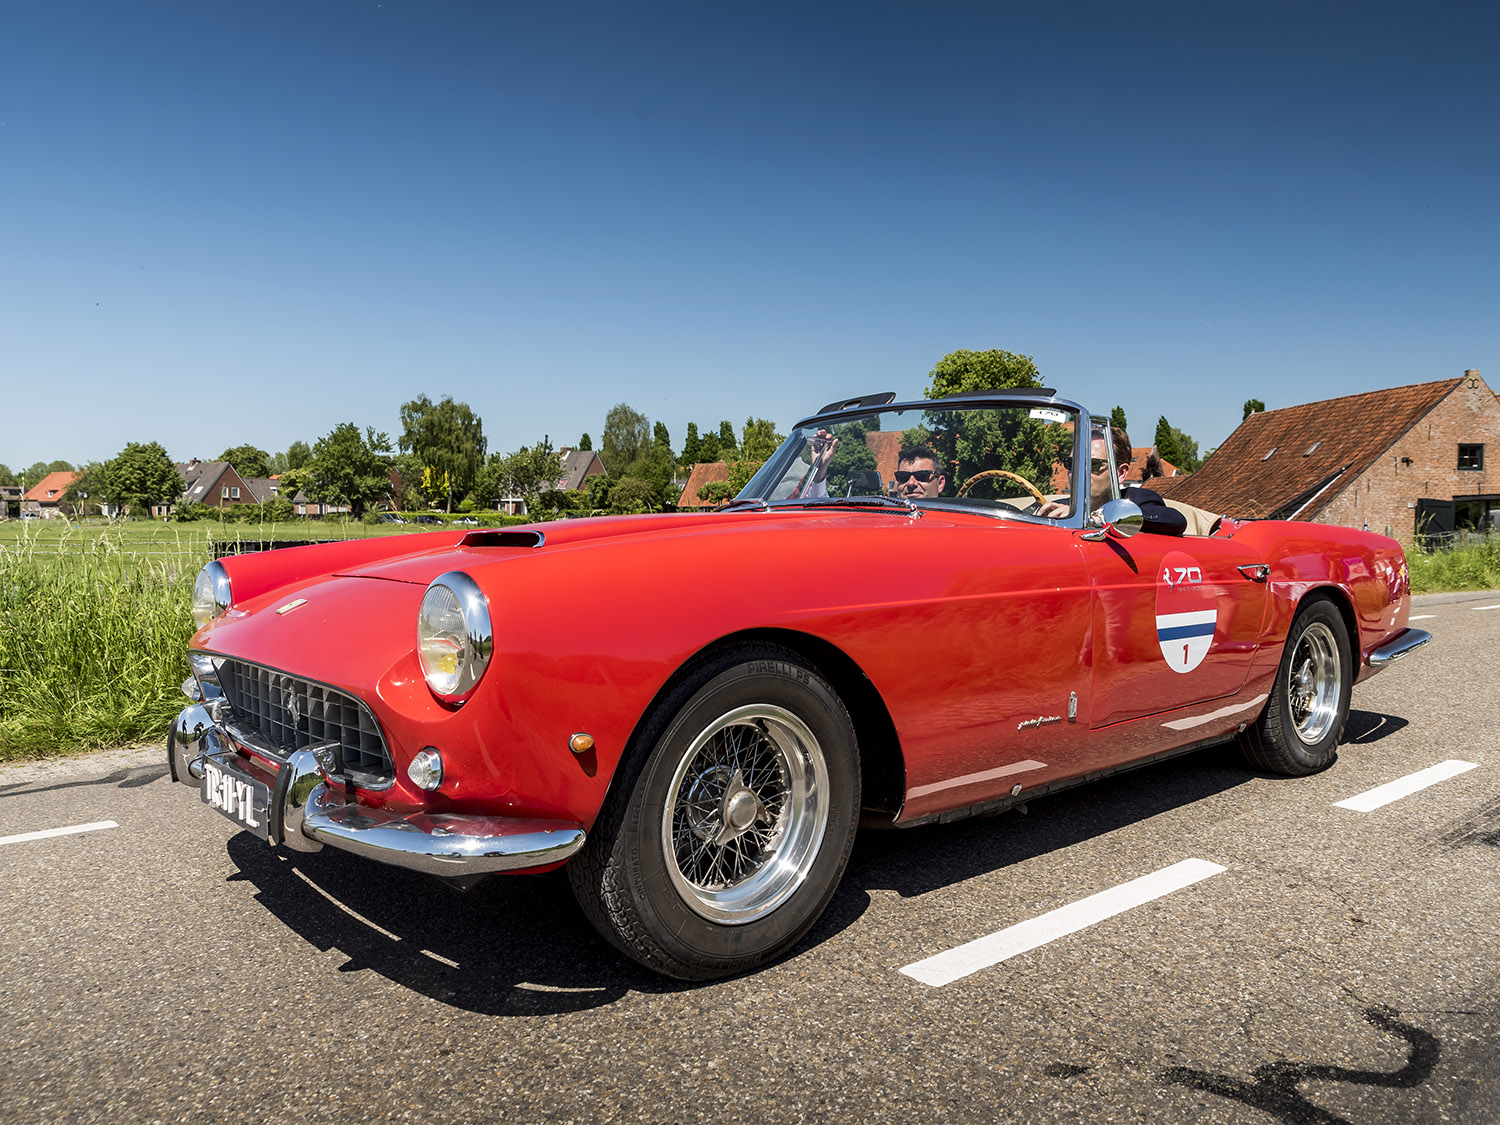 Event: Kroymans Ferrari 70 Year Anniversary Parade